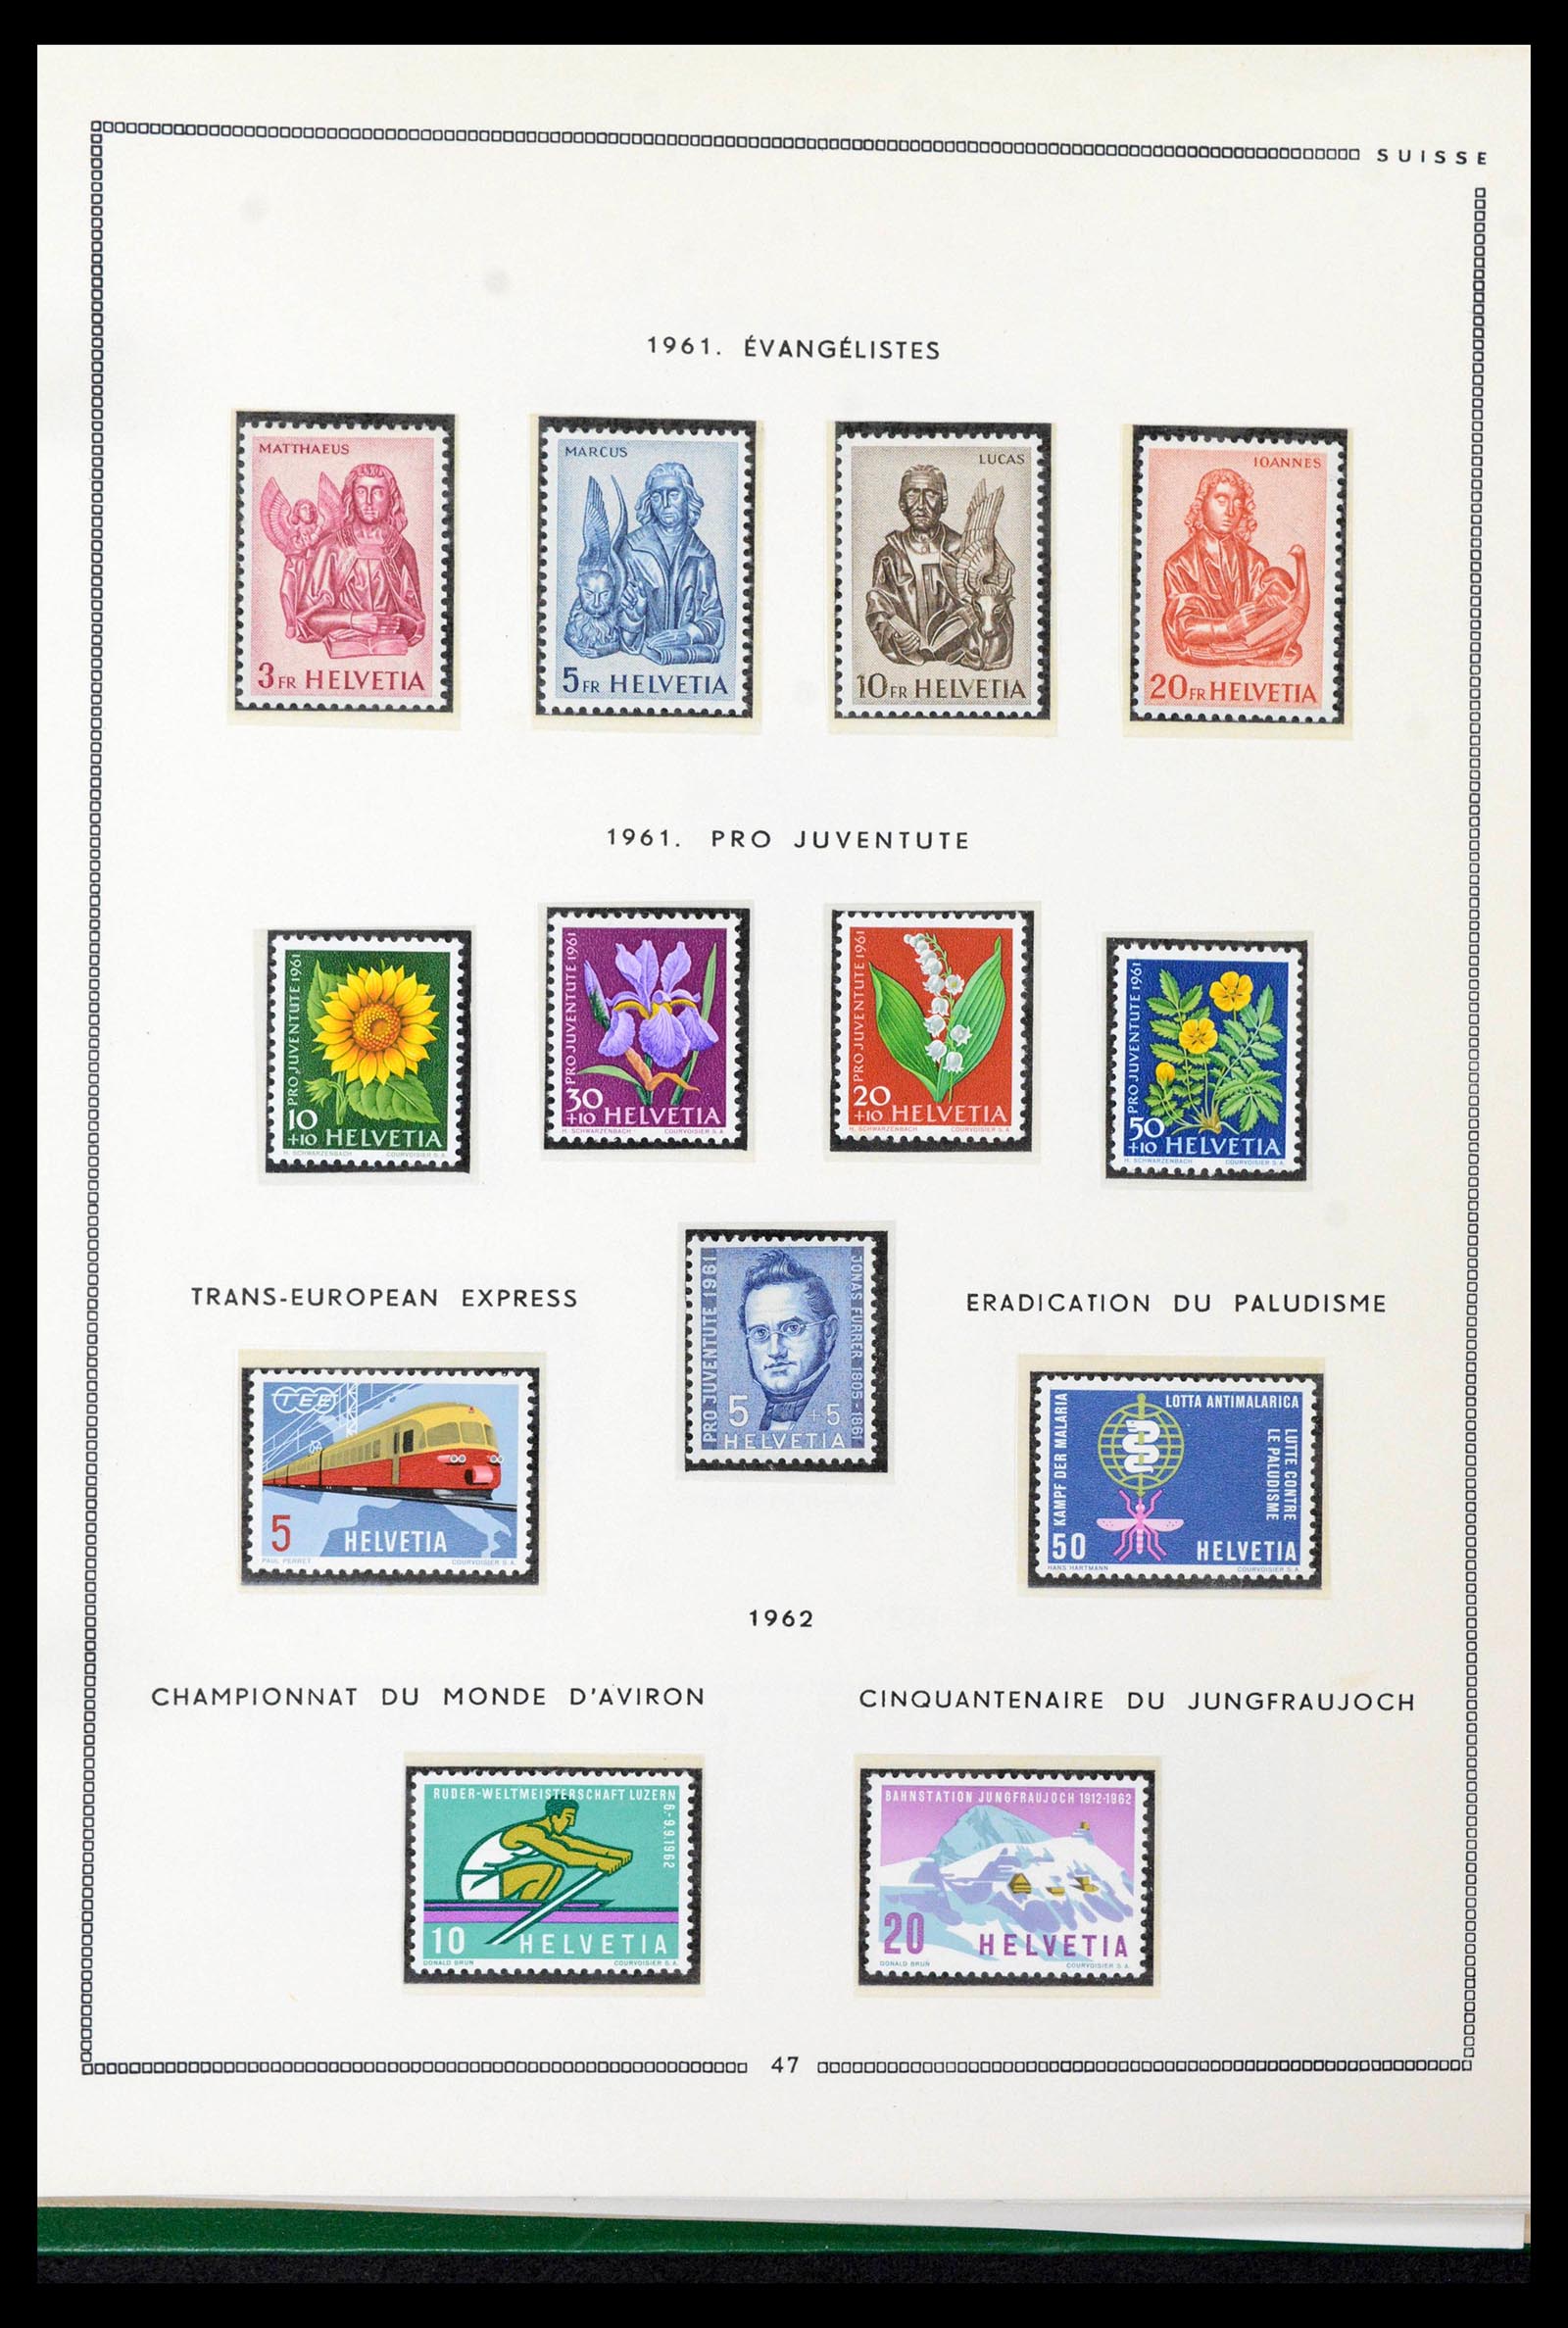 39096 0042 - Stamp collection 39096 Switzerland 1907-1963.